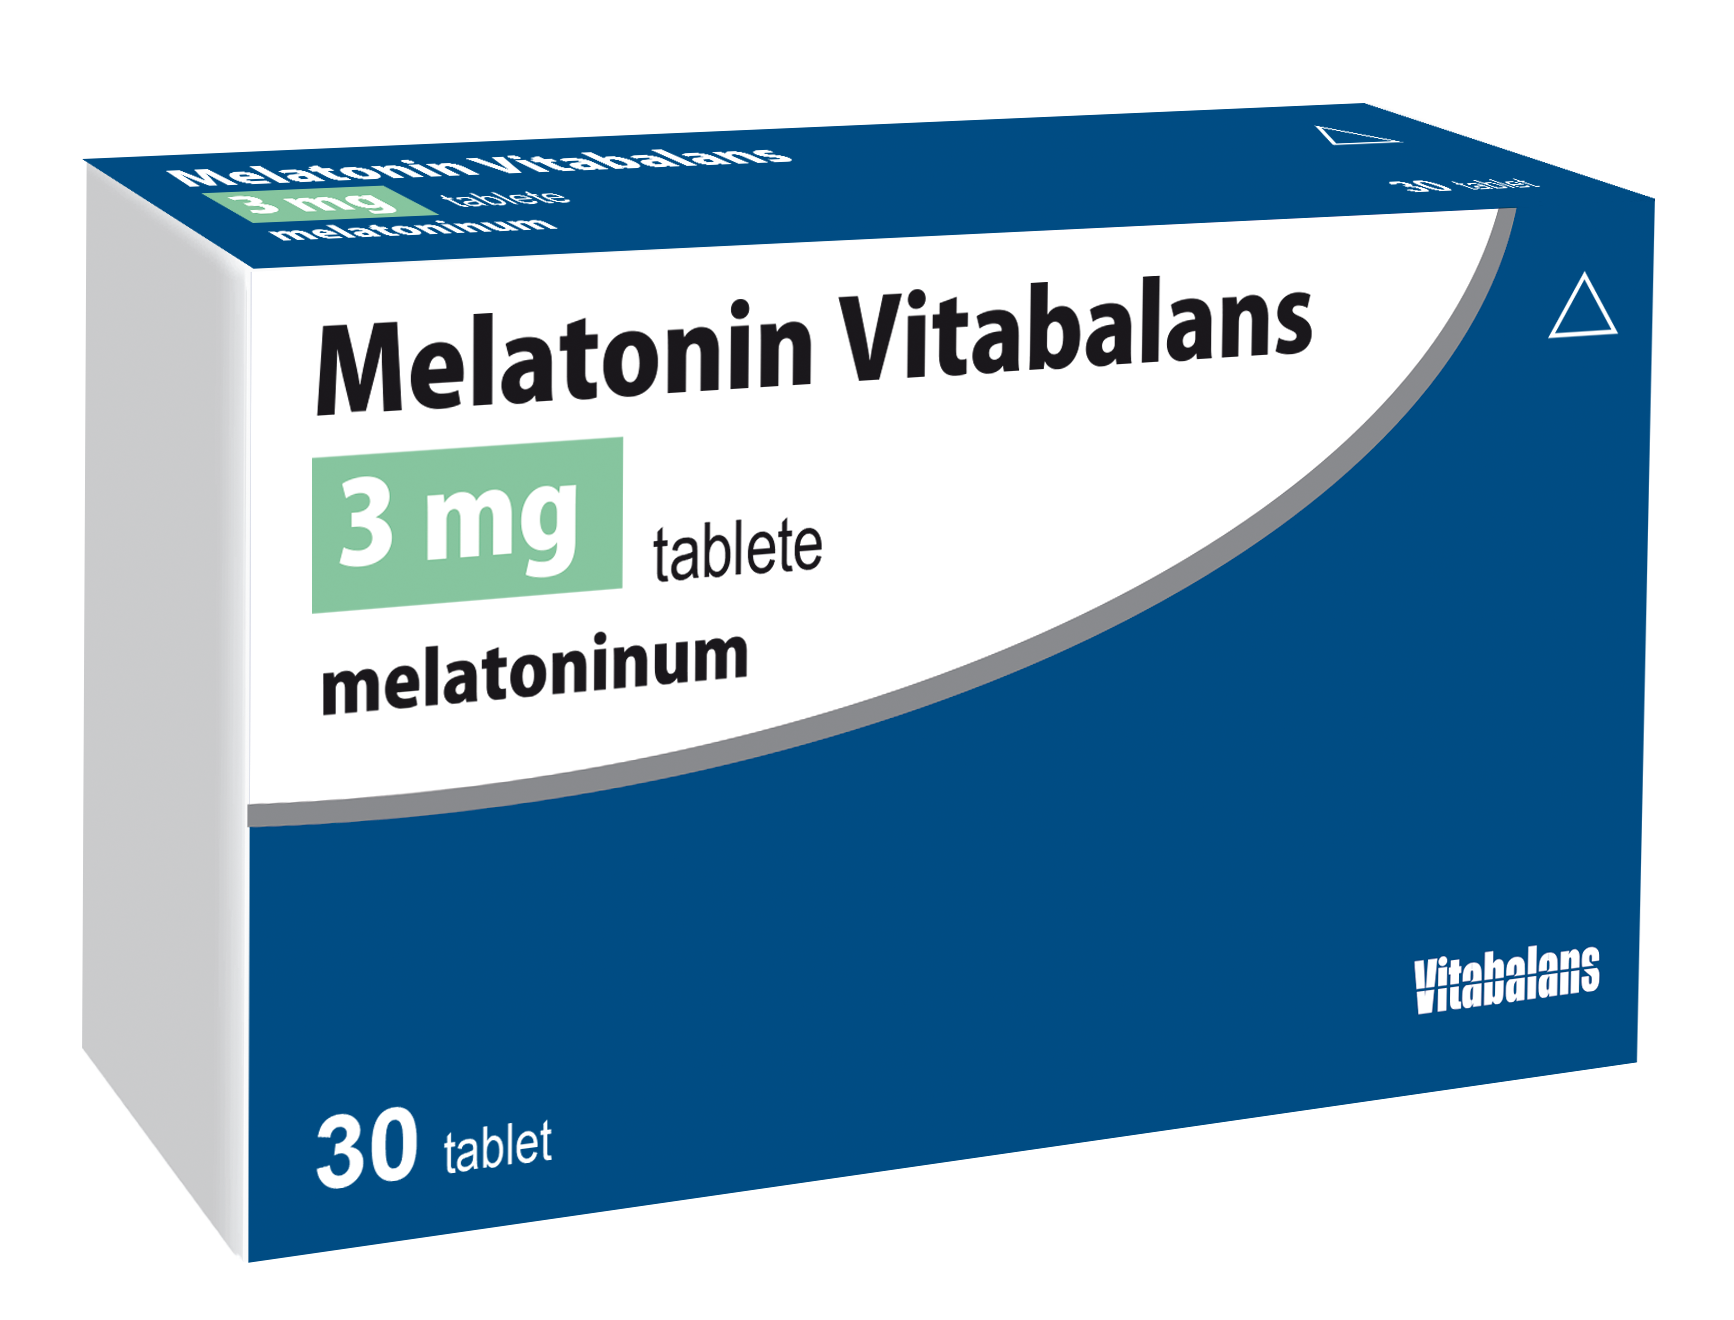 Melatonin Vitabalans 3 mg tablete, 30 tablet